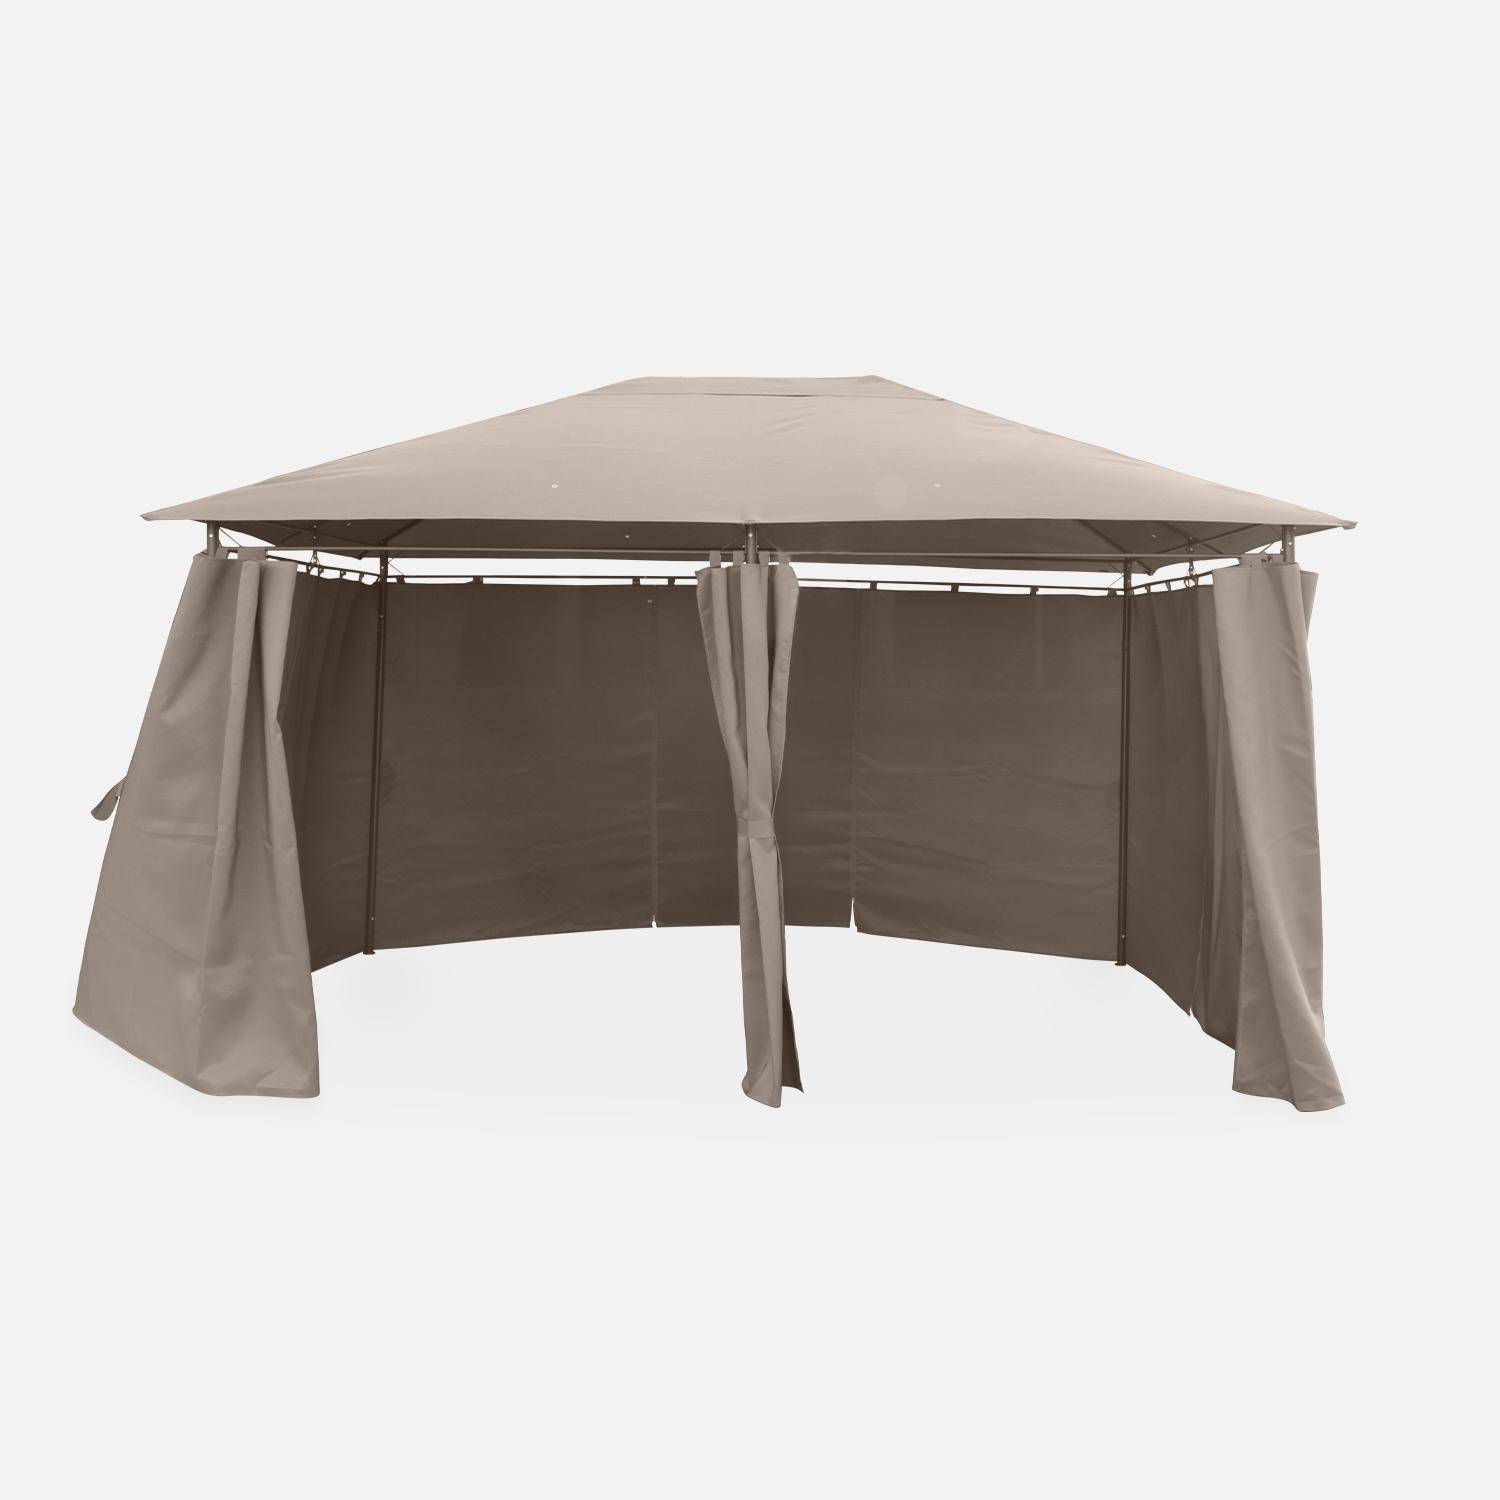 Pergola 3x4m - Divio - Tela talpa/bruna - Pergola con tende, tenda da giardino, gazebo, ricevimenti Photo2